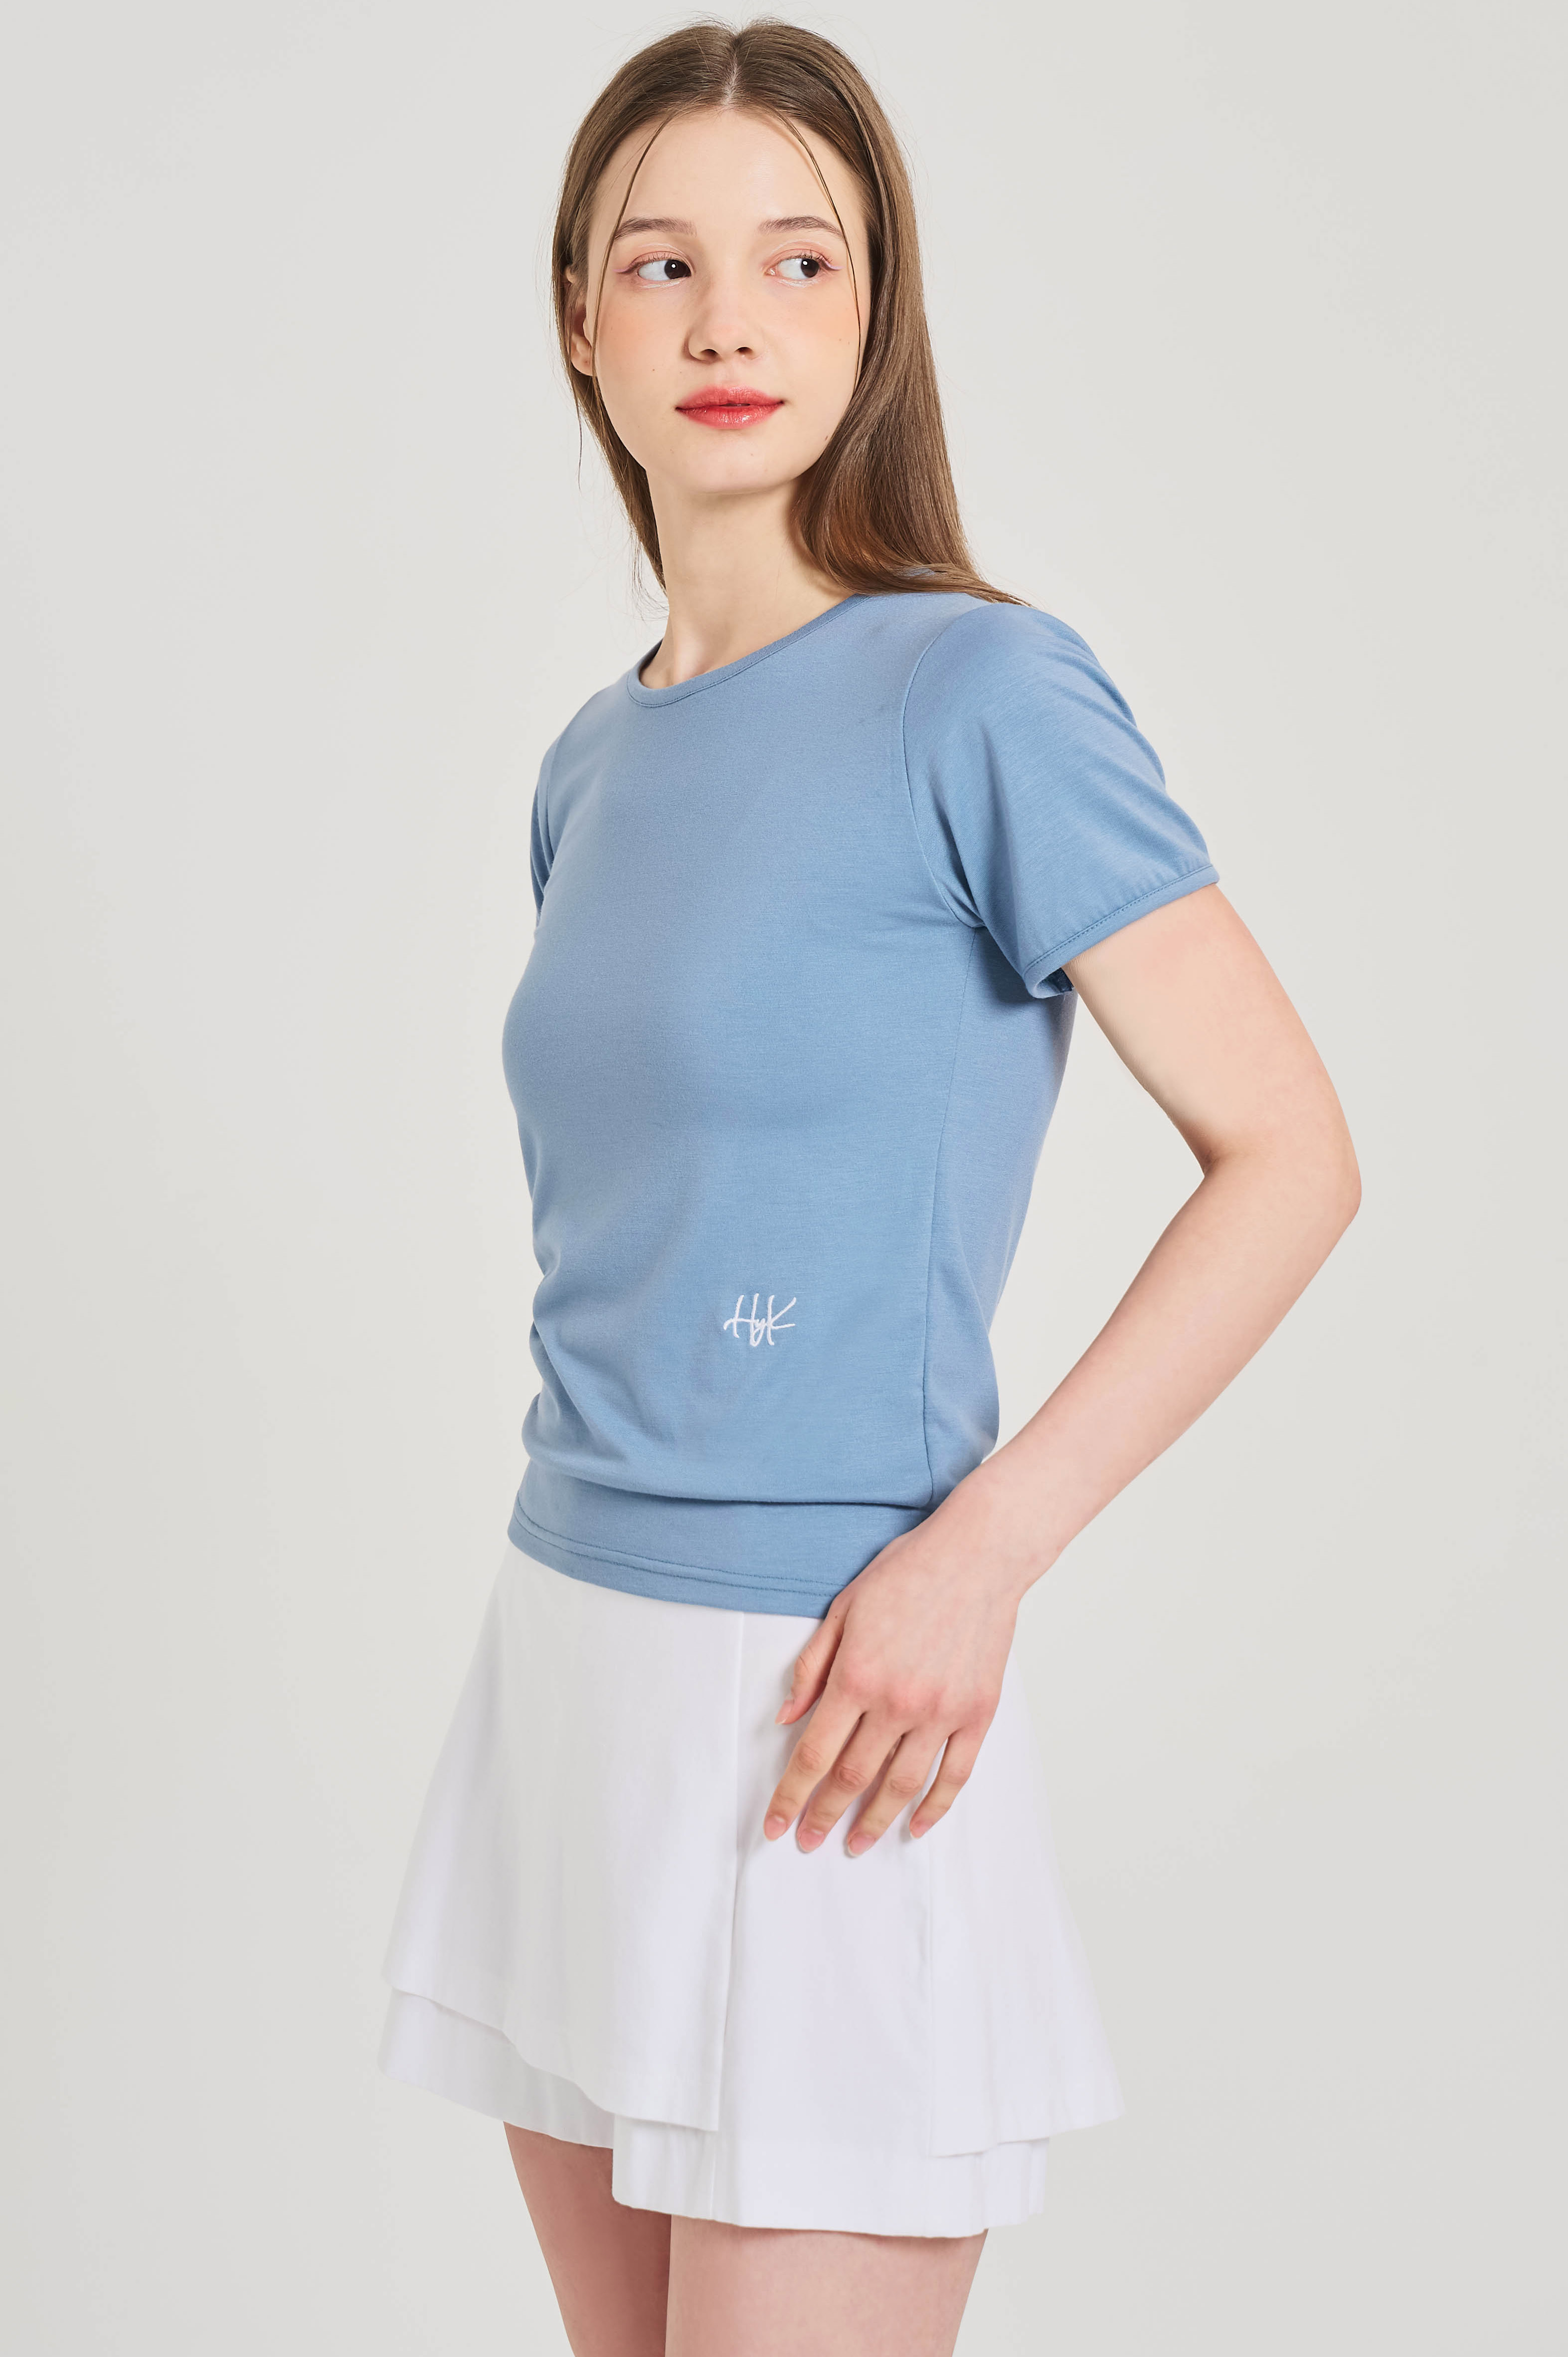 LOGO T-SHIRT-blue, 혜영킴, HYEYEONG KIM designer brand